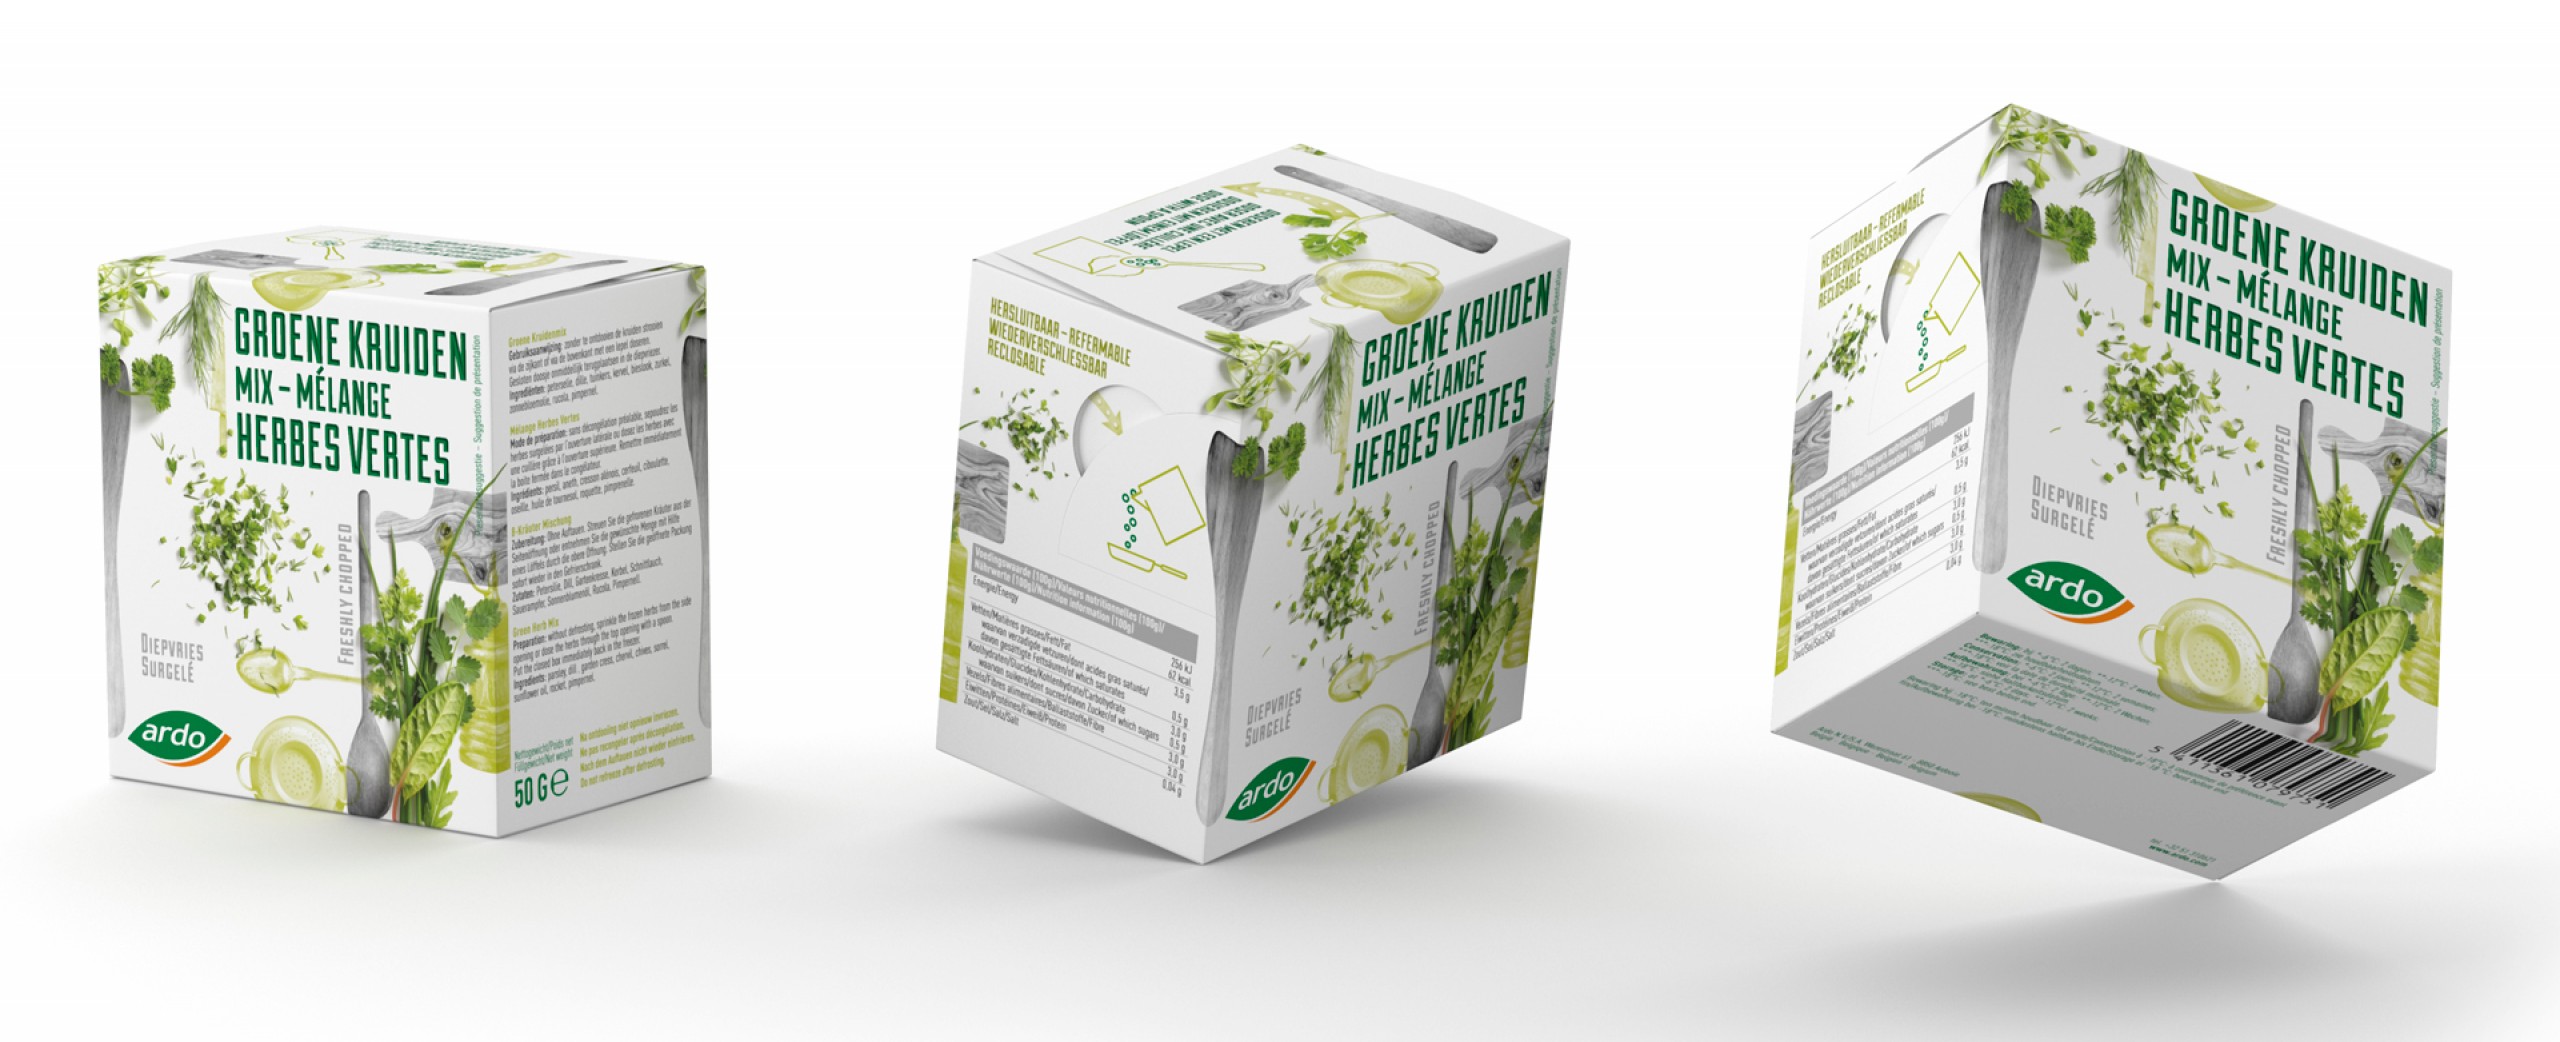 Quatre Mains package design - Package design herbs, frozen, packaging,